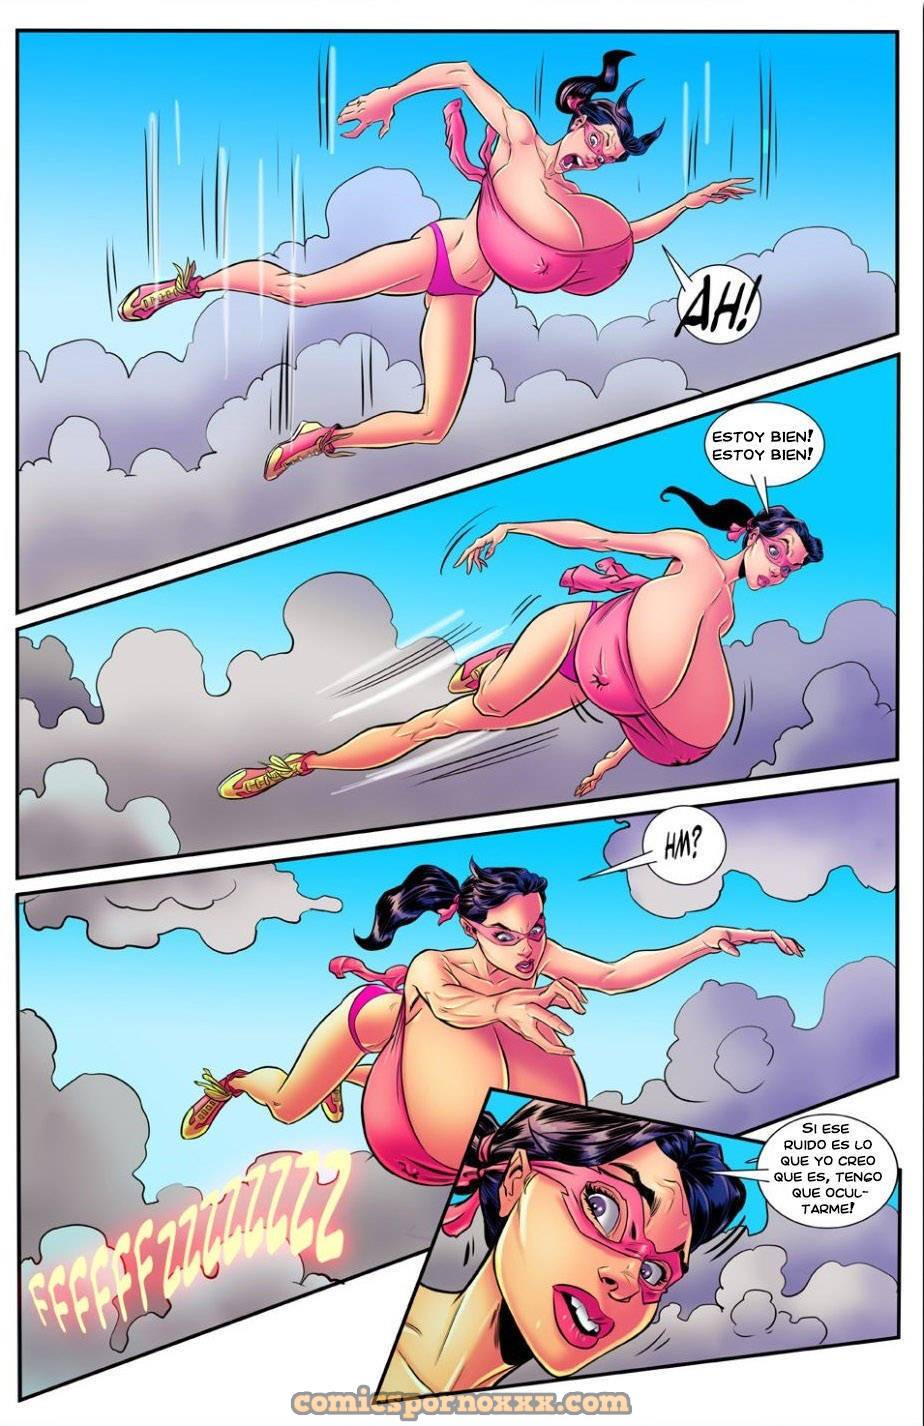 Super BEro: Rising #3 - 8 - Comics Porno - Hentai Manga - Cartoon XXX